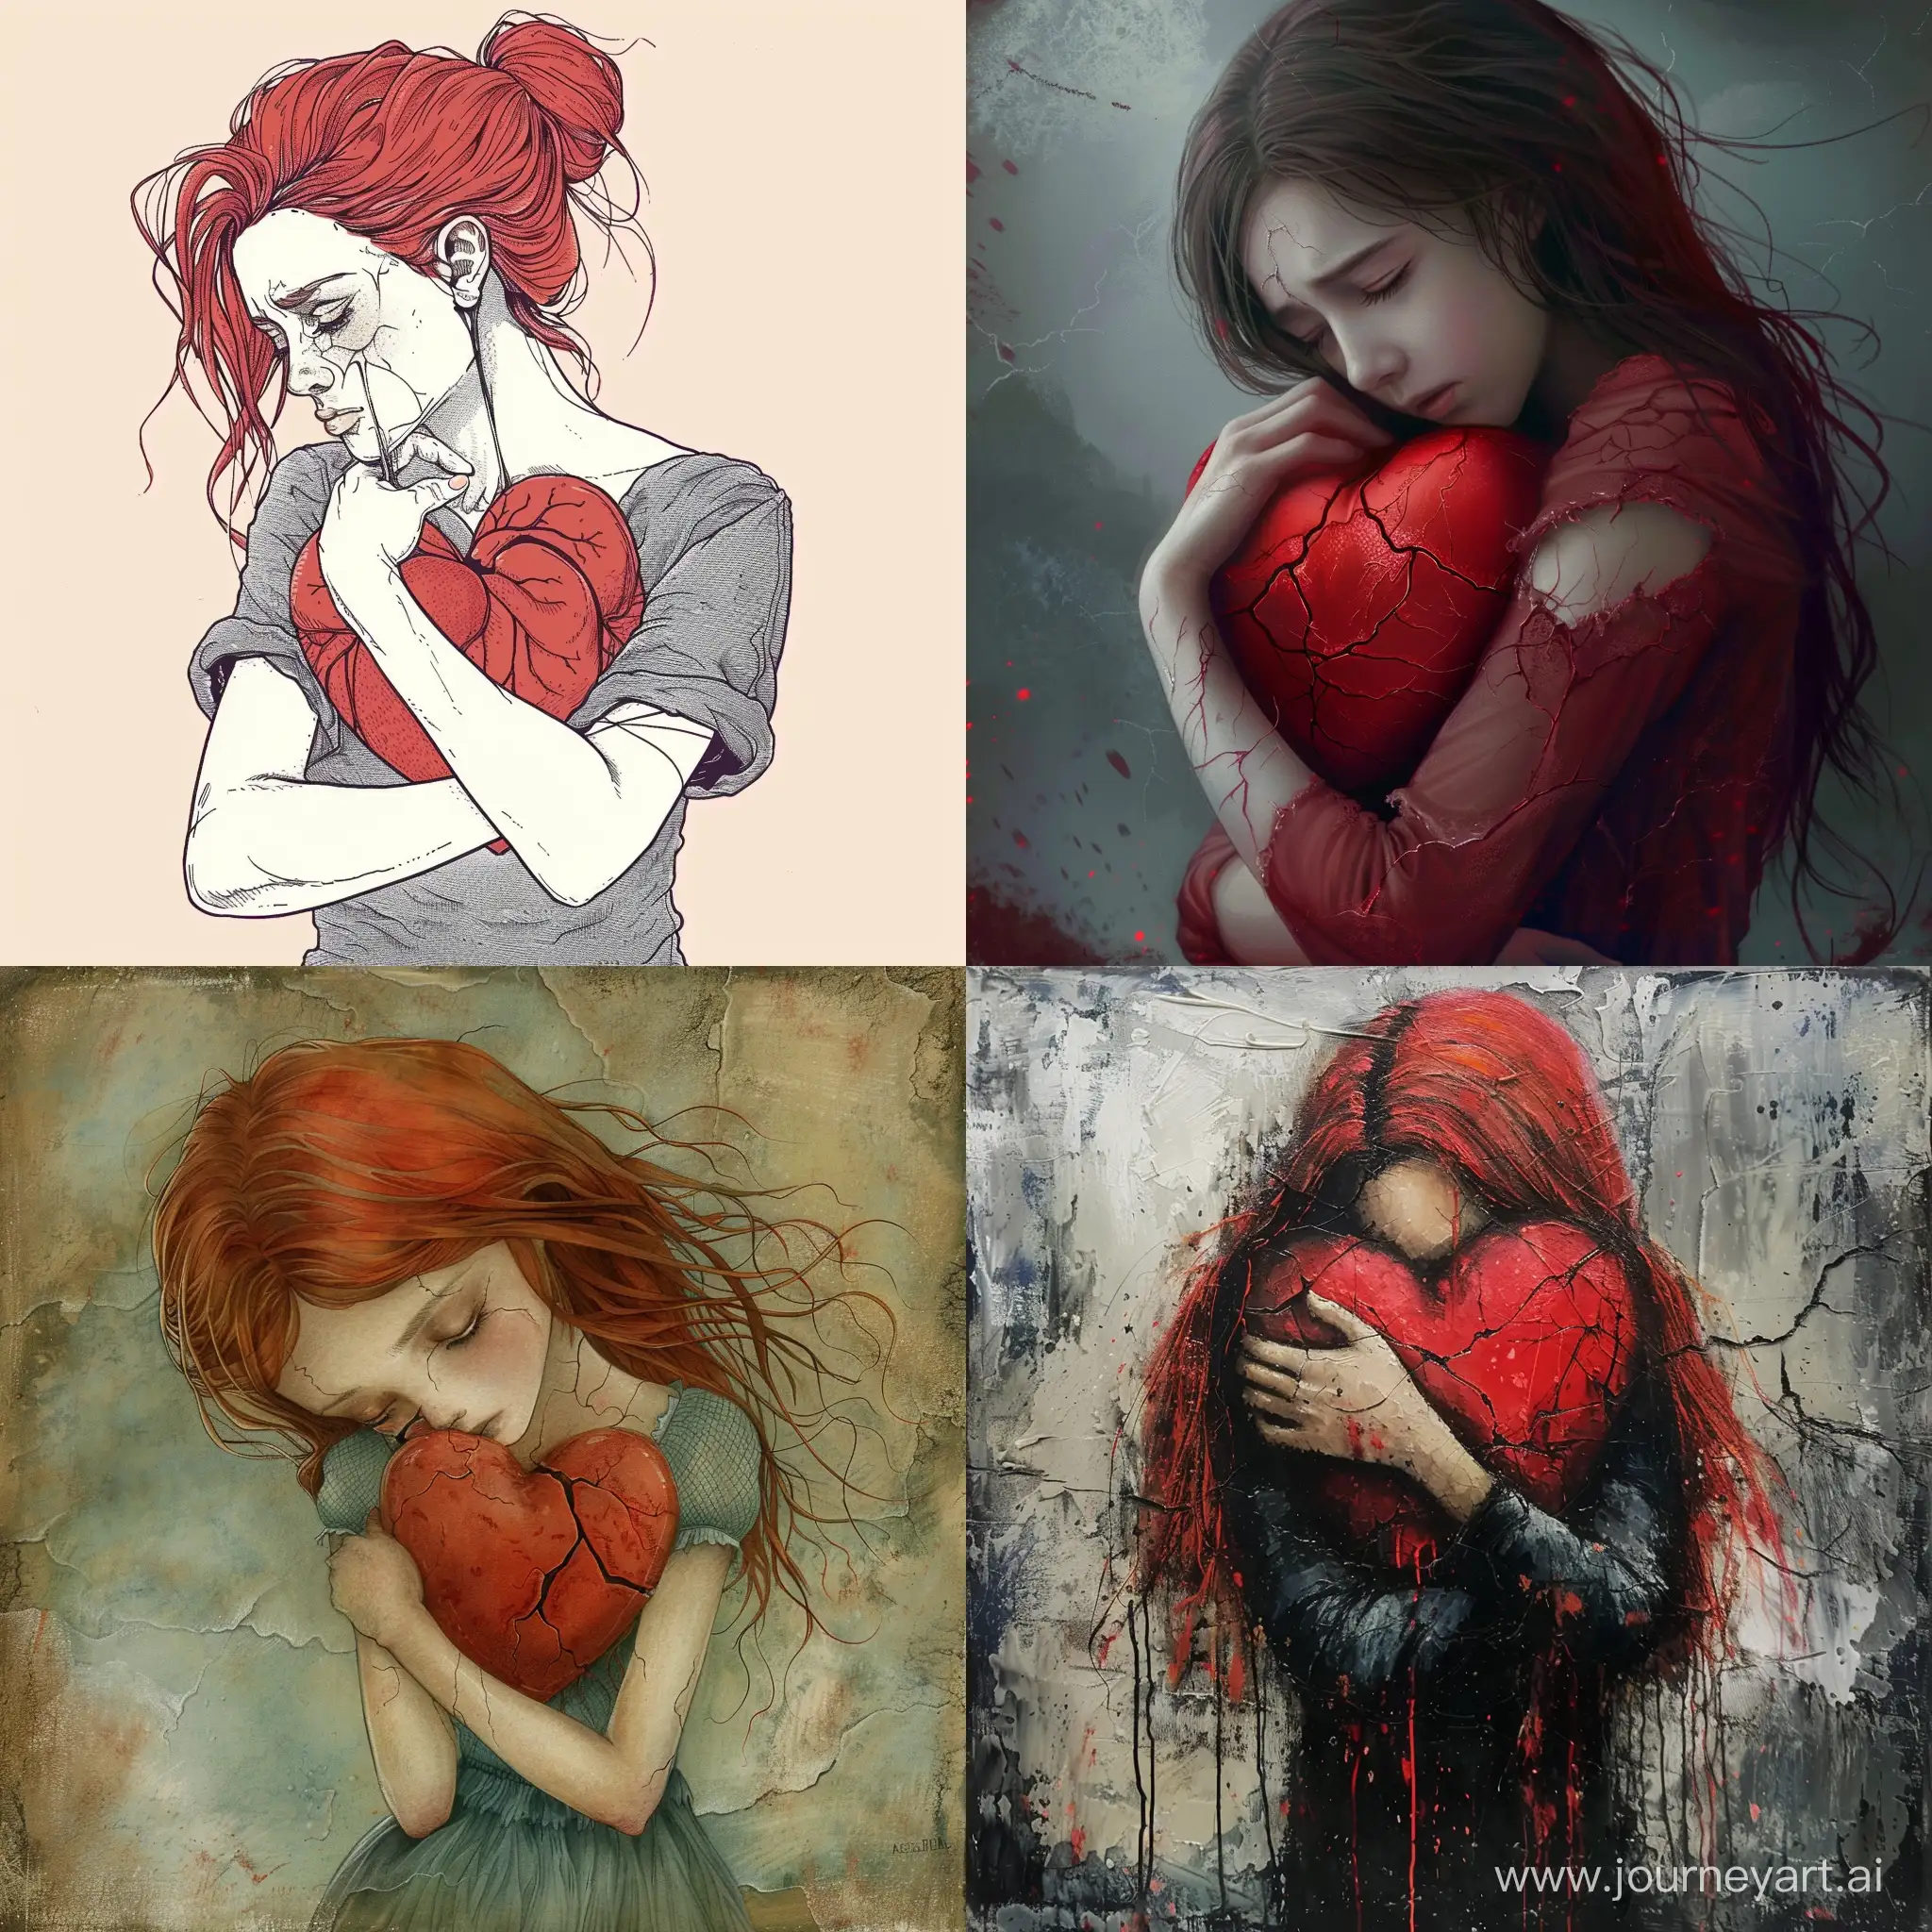 Girls who hug her heart but the heart has cracks